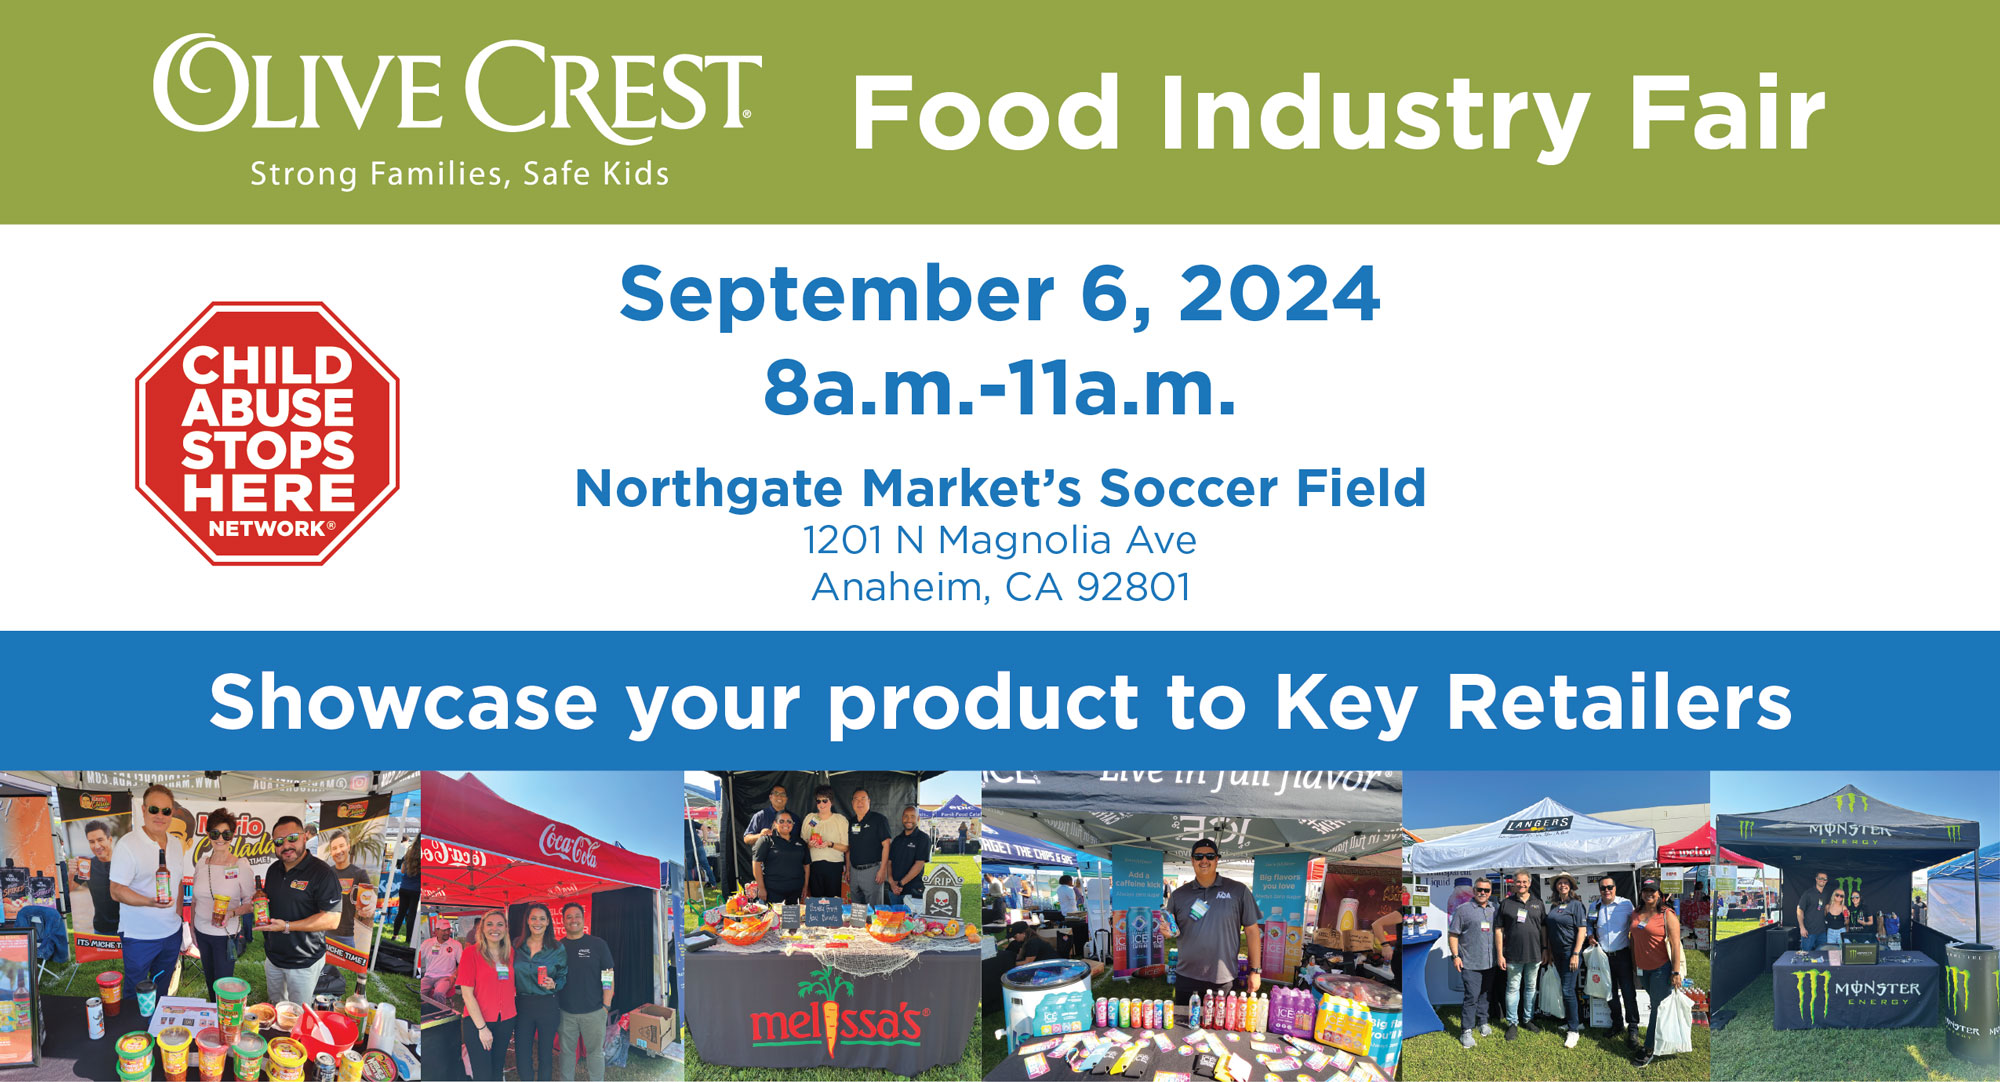 Food Industry Fair September 6, 2024 at 8:00 am - 11:00 am